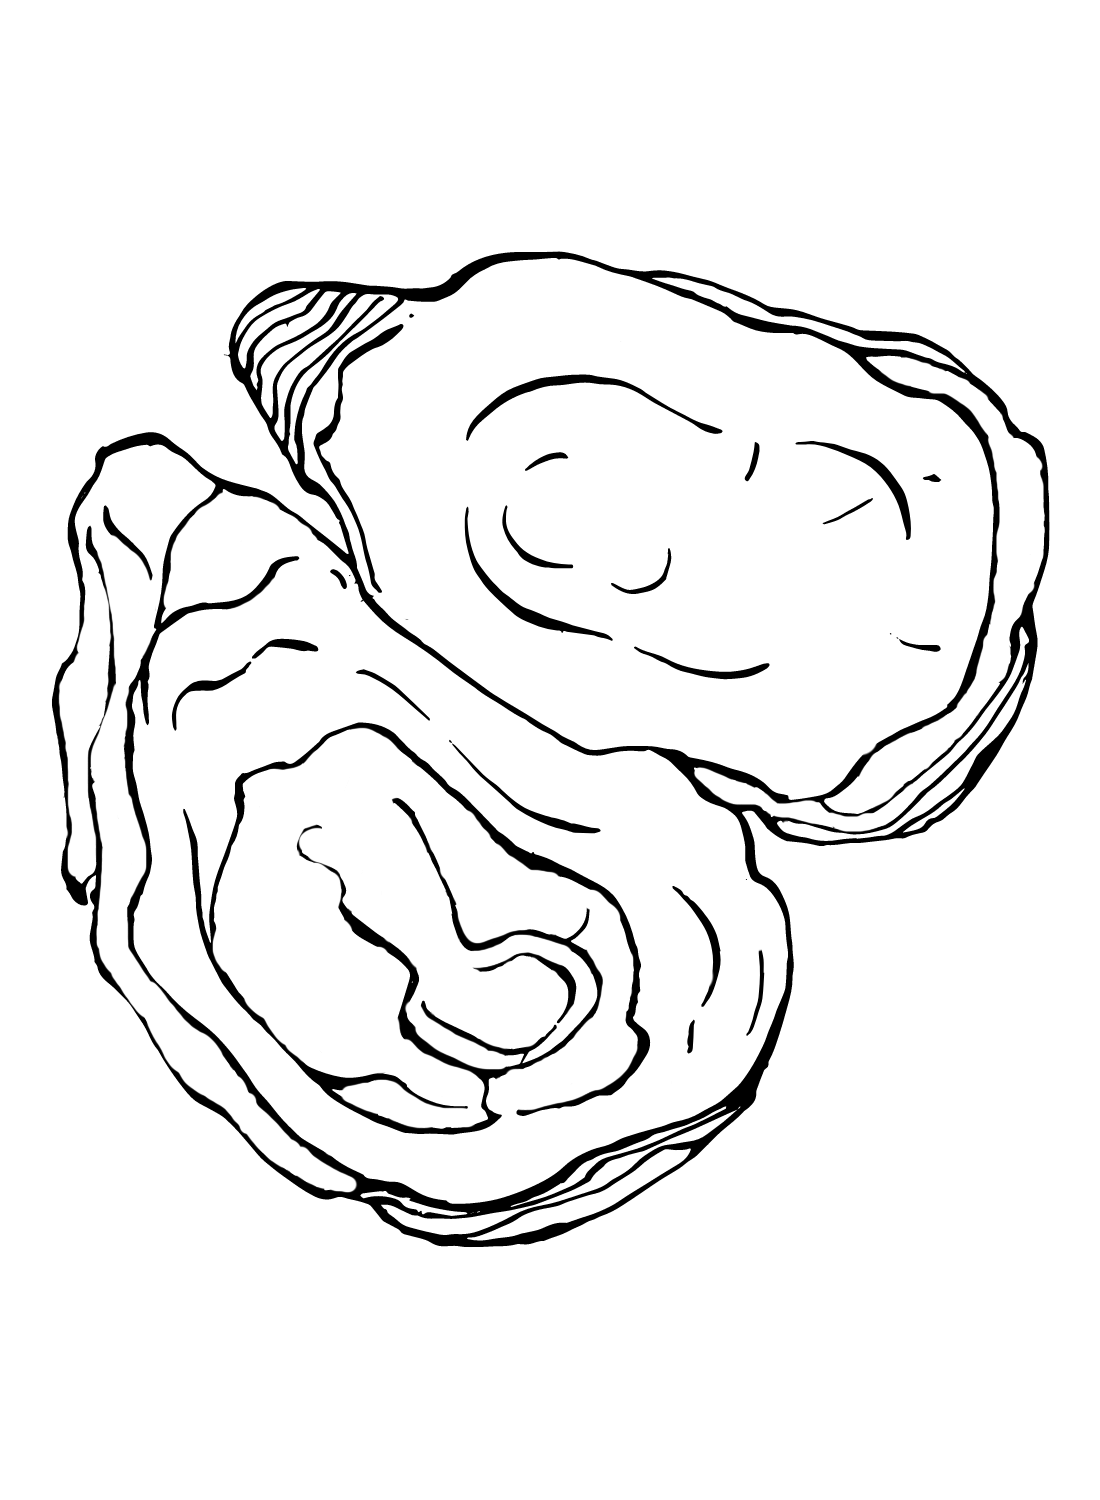 Oyster kleurvellen van Oyster